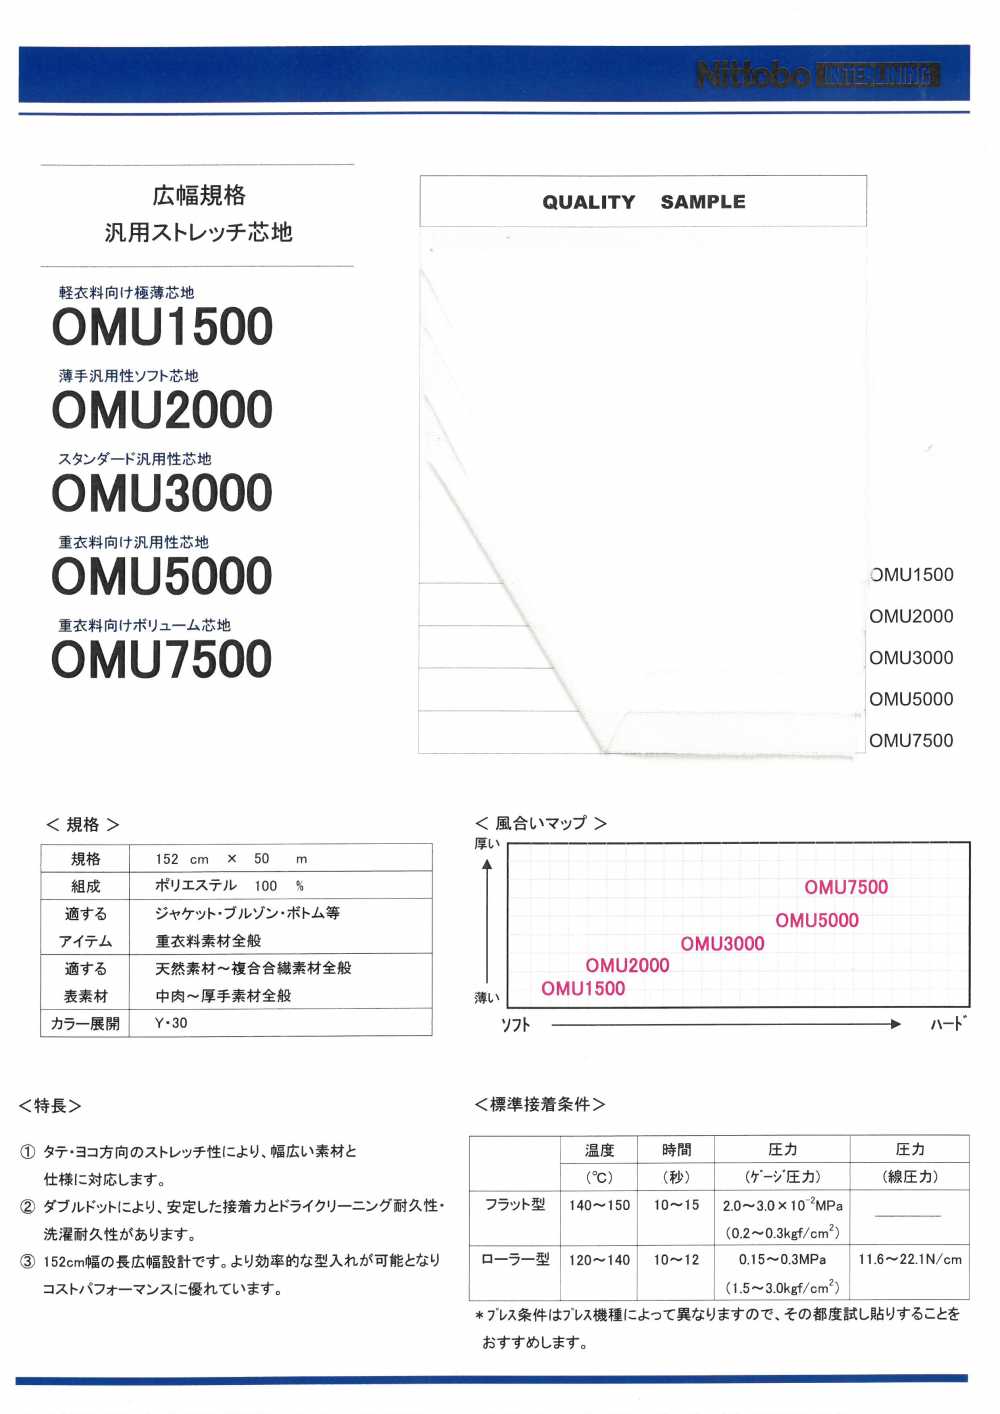 OMU3000 标准多功能衬布 日东纺绩